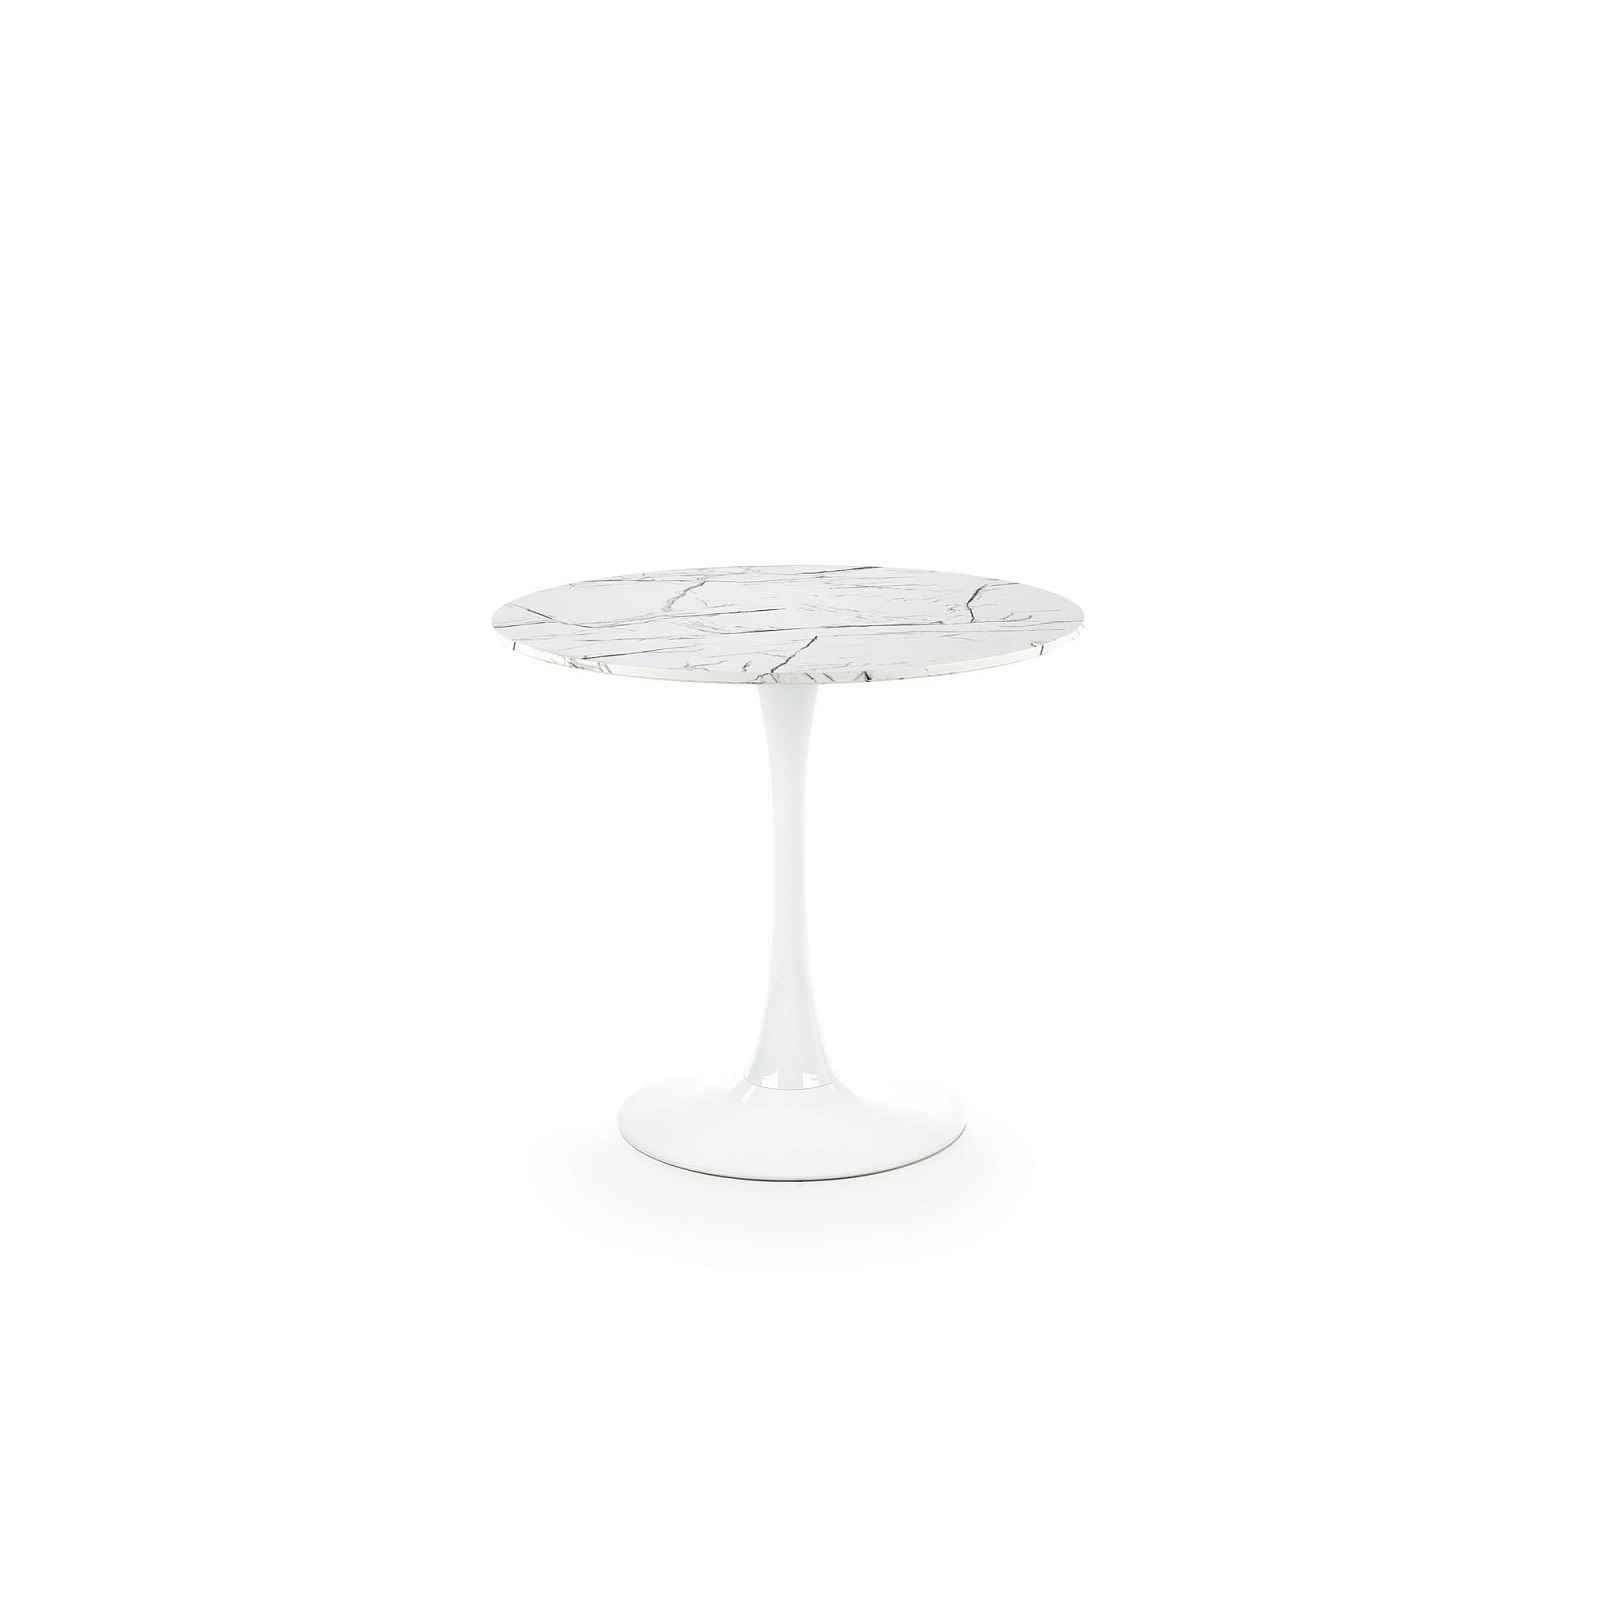 Kulatý stůl CLOVE, bílý mramor